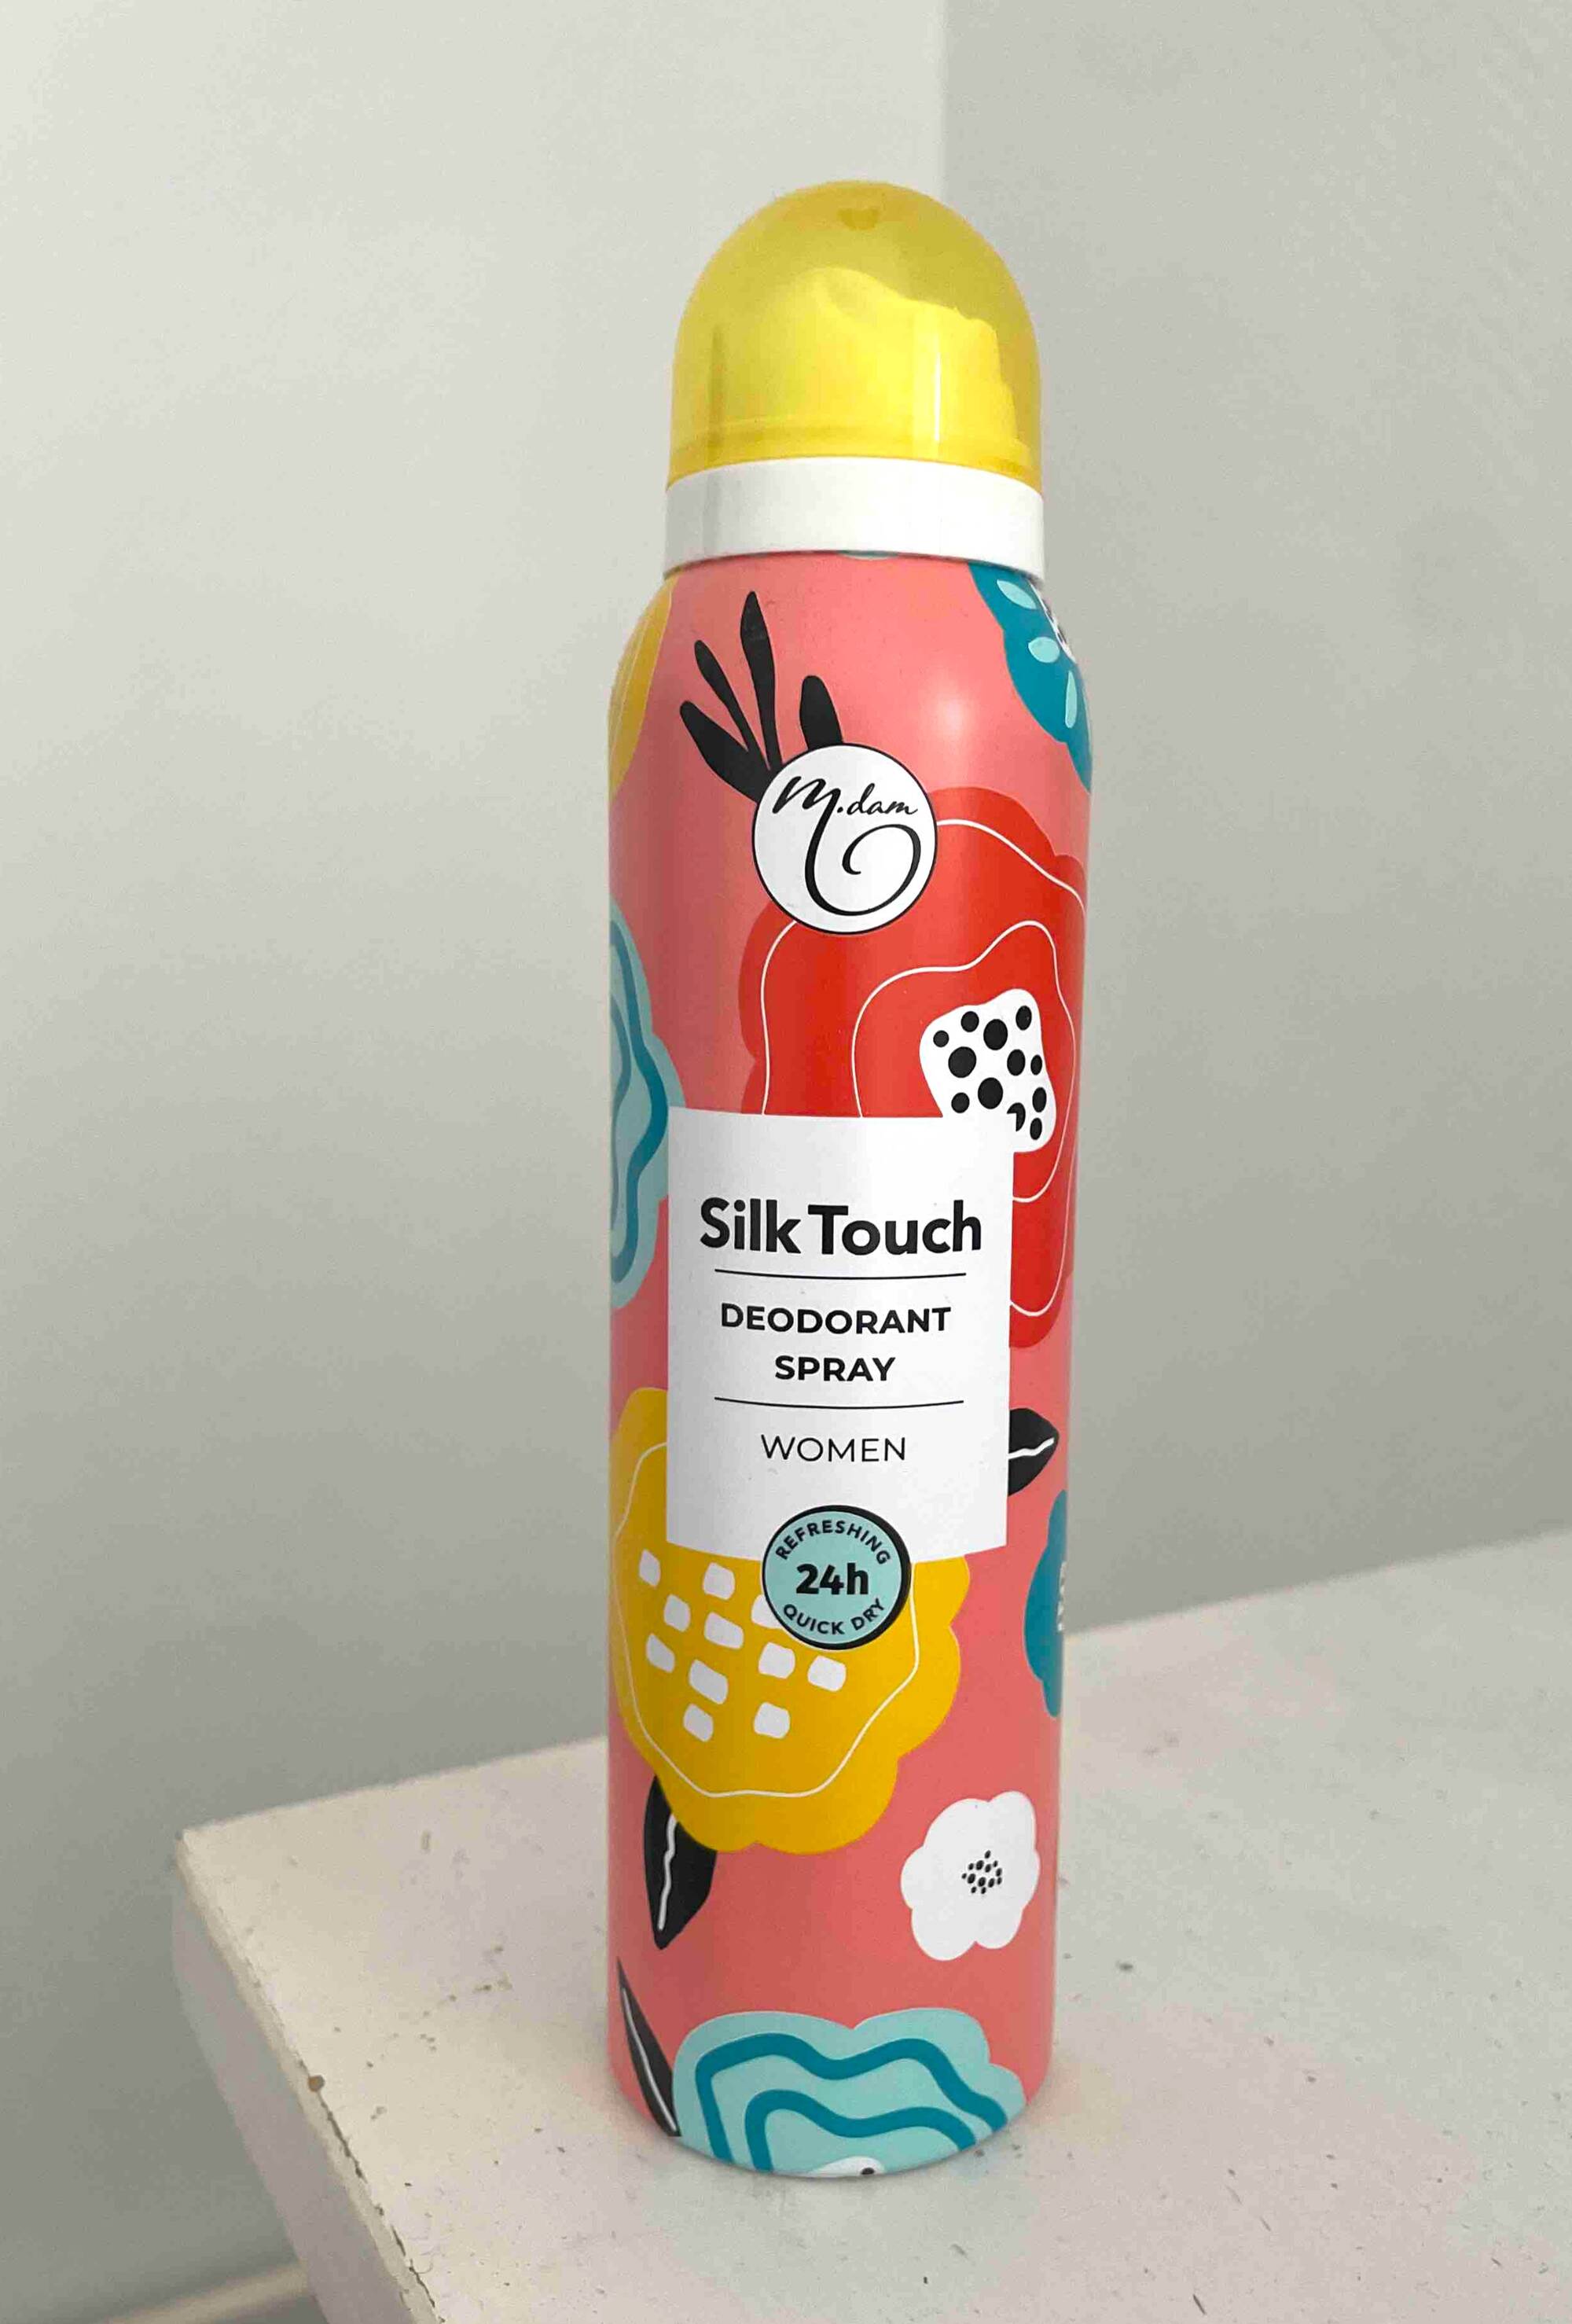 M DAM - Silk touch - deodorant spray  Women  24h